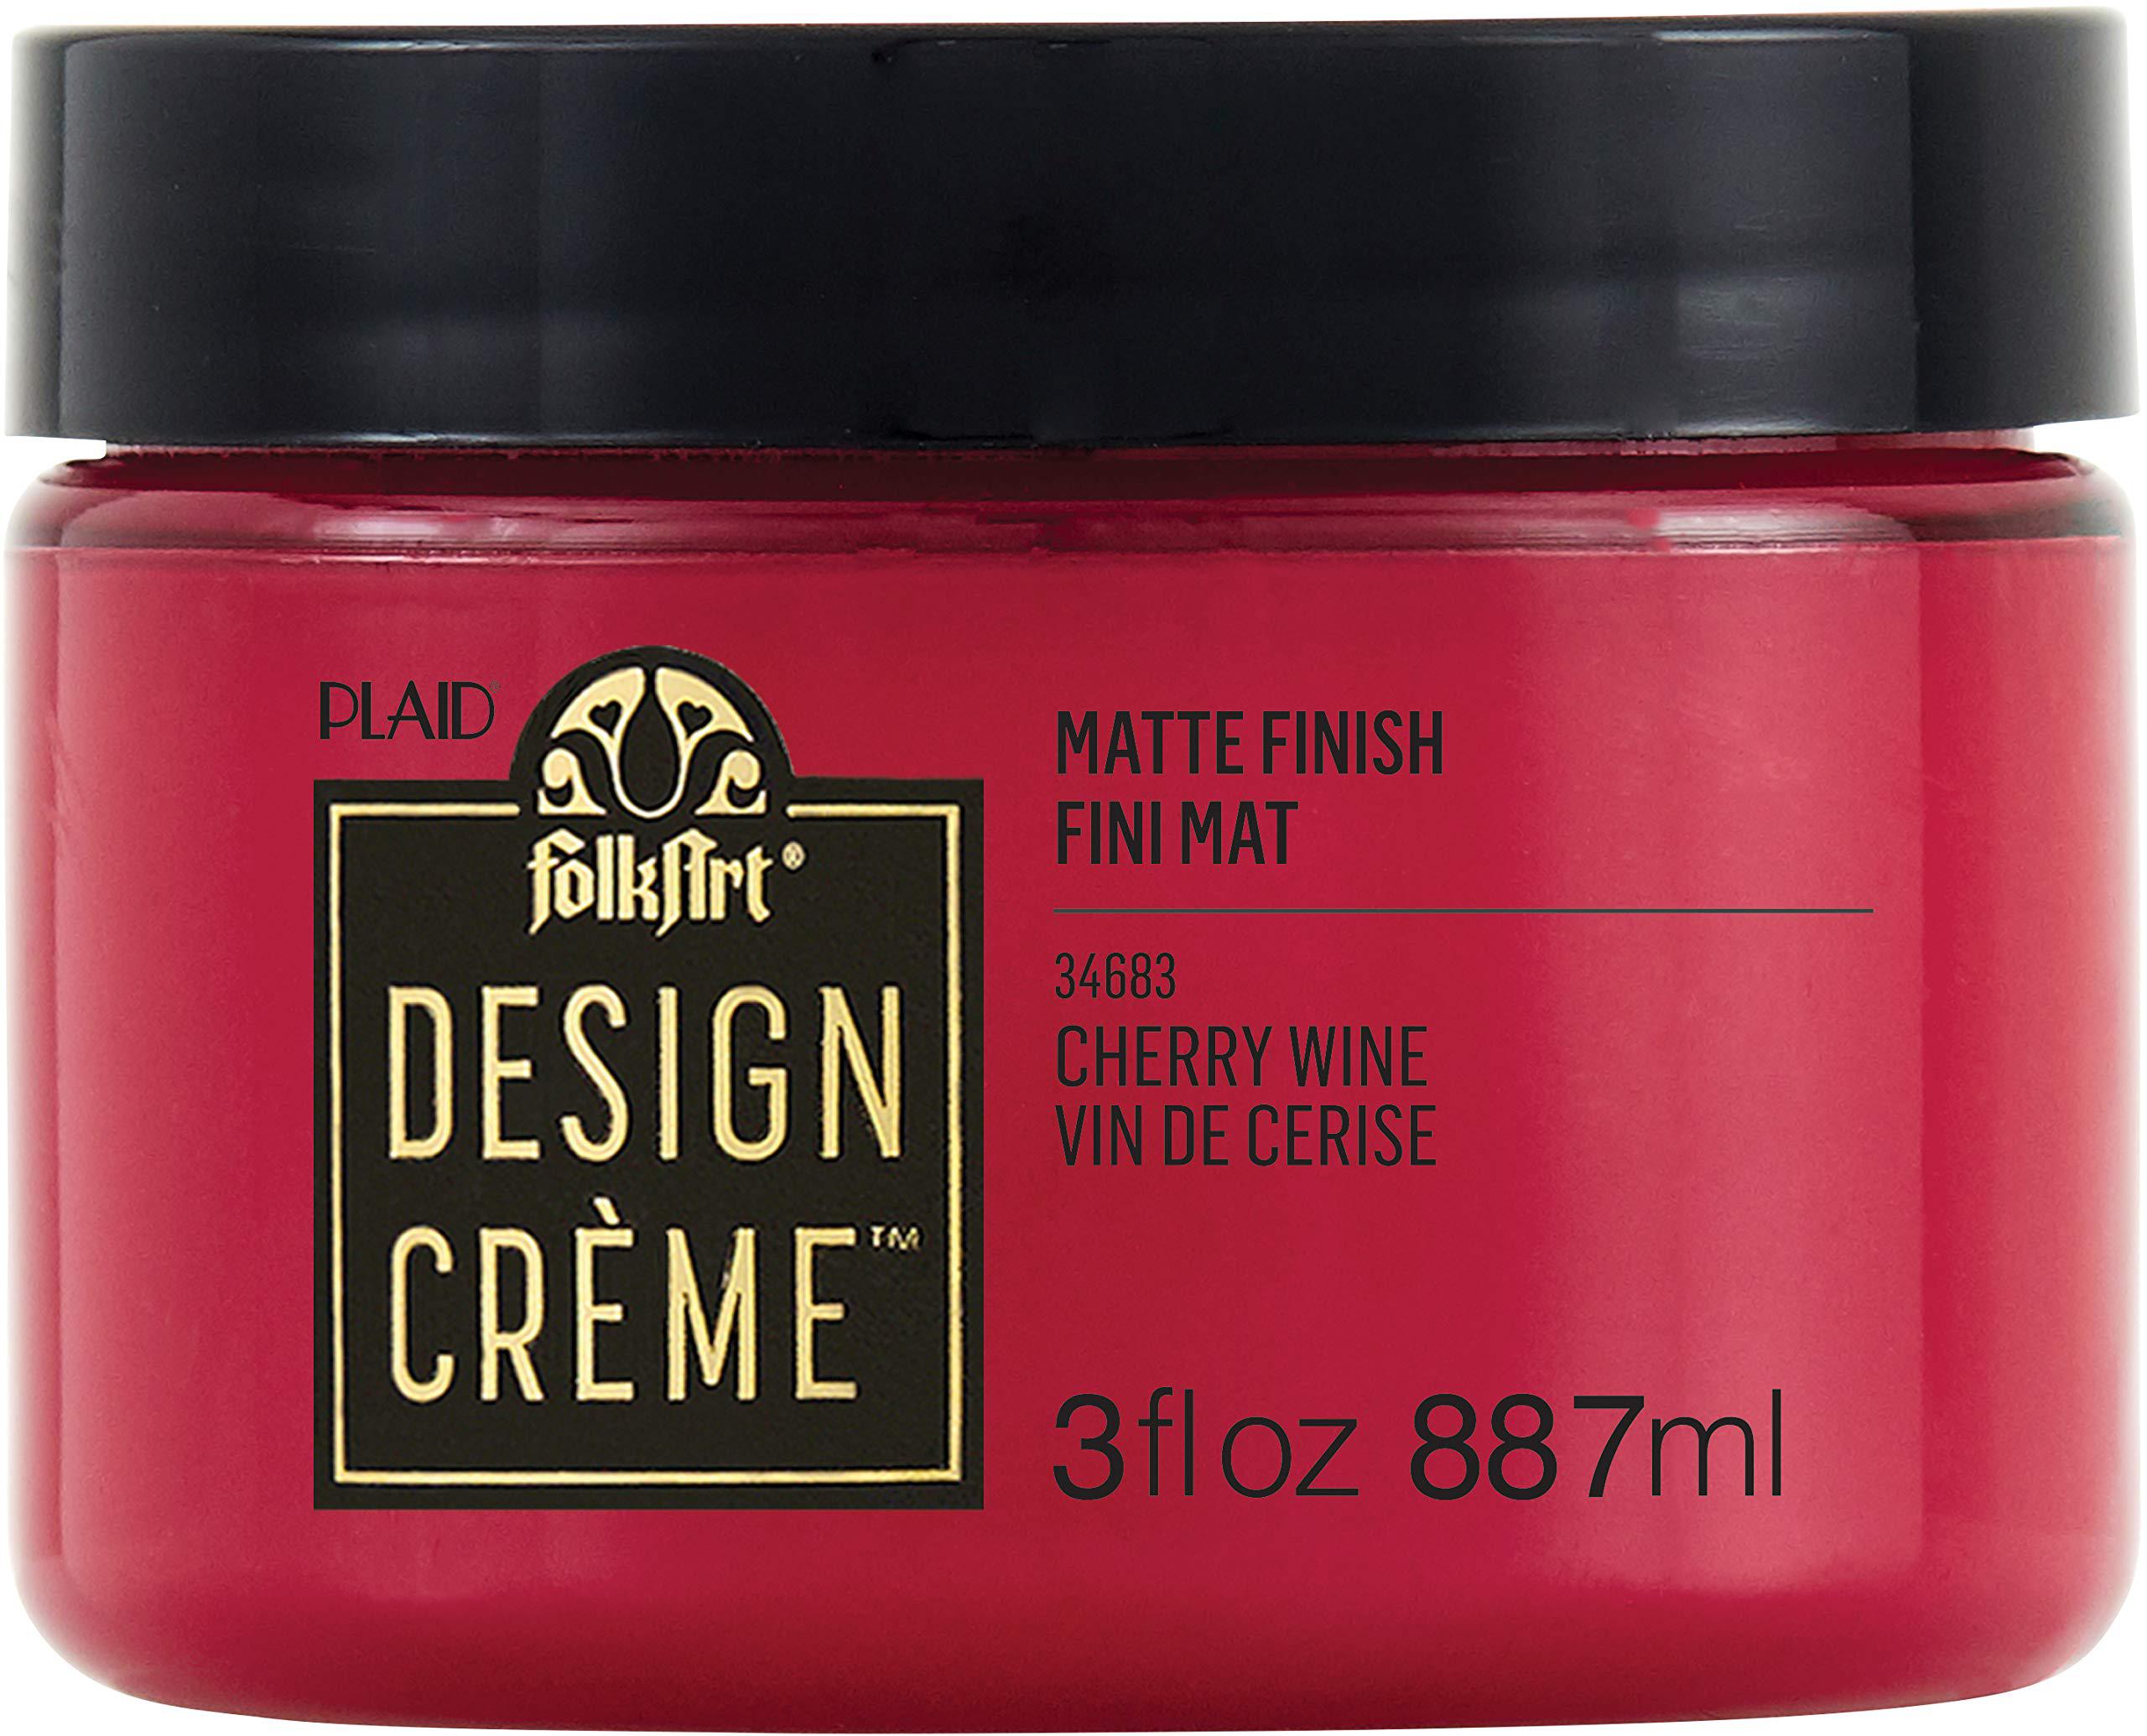 folkart 34683 design crme paint, cherry wine, 3 oz